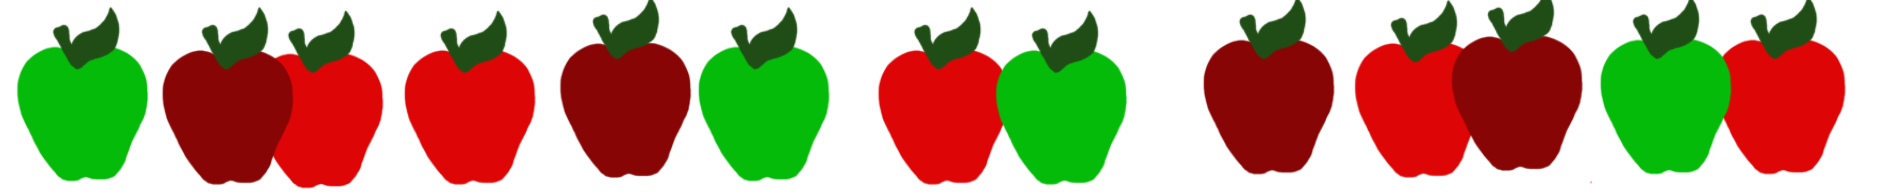 clipart apples banner